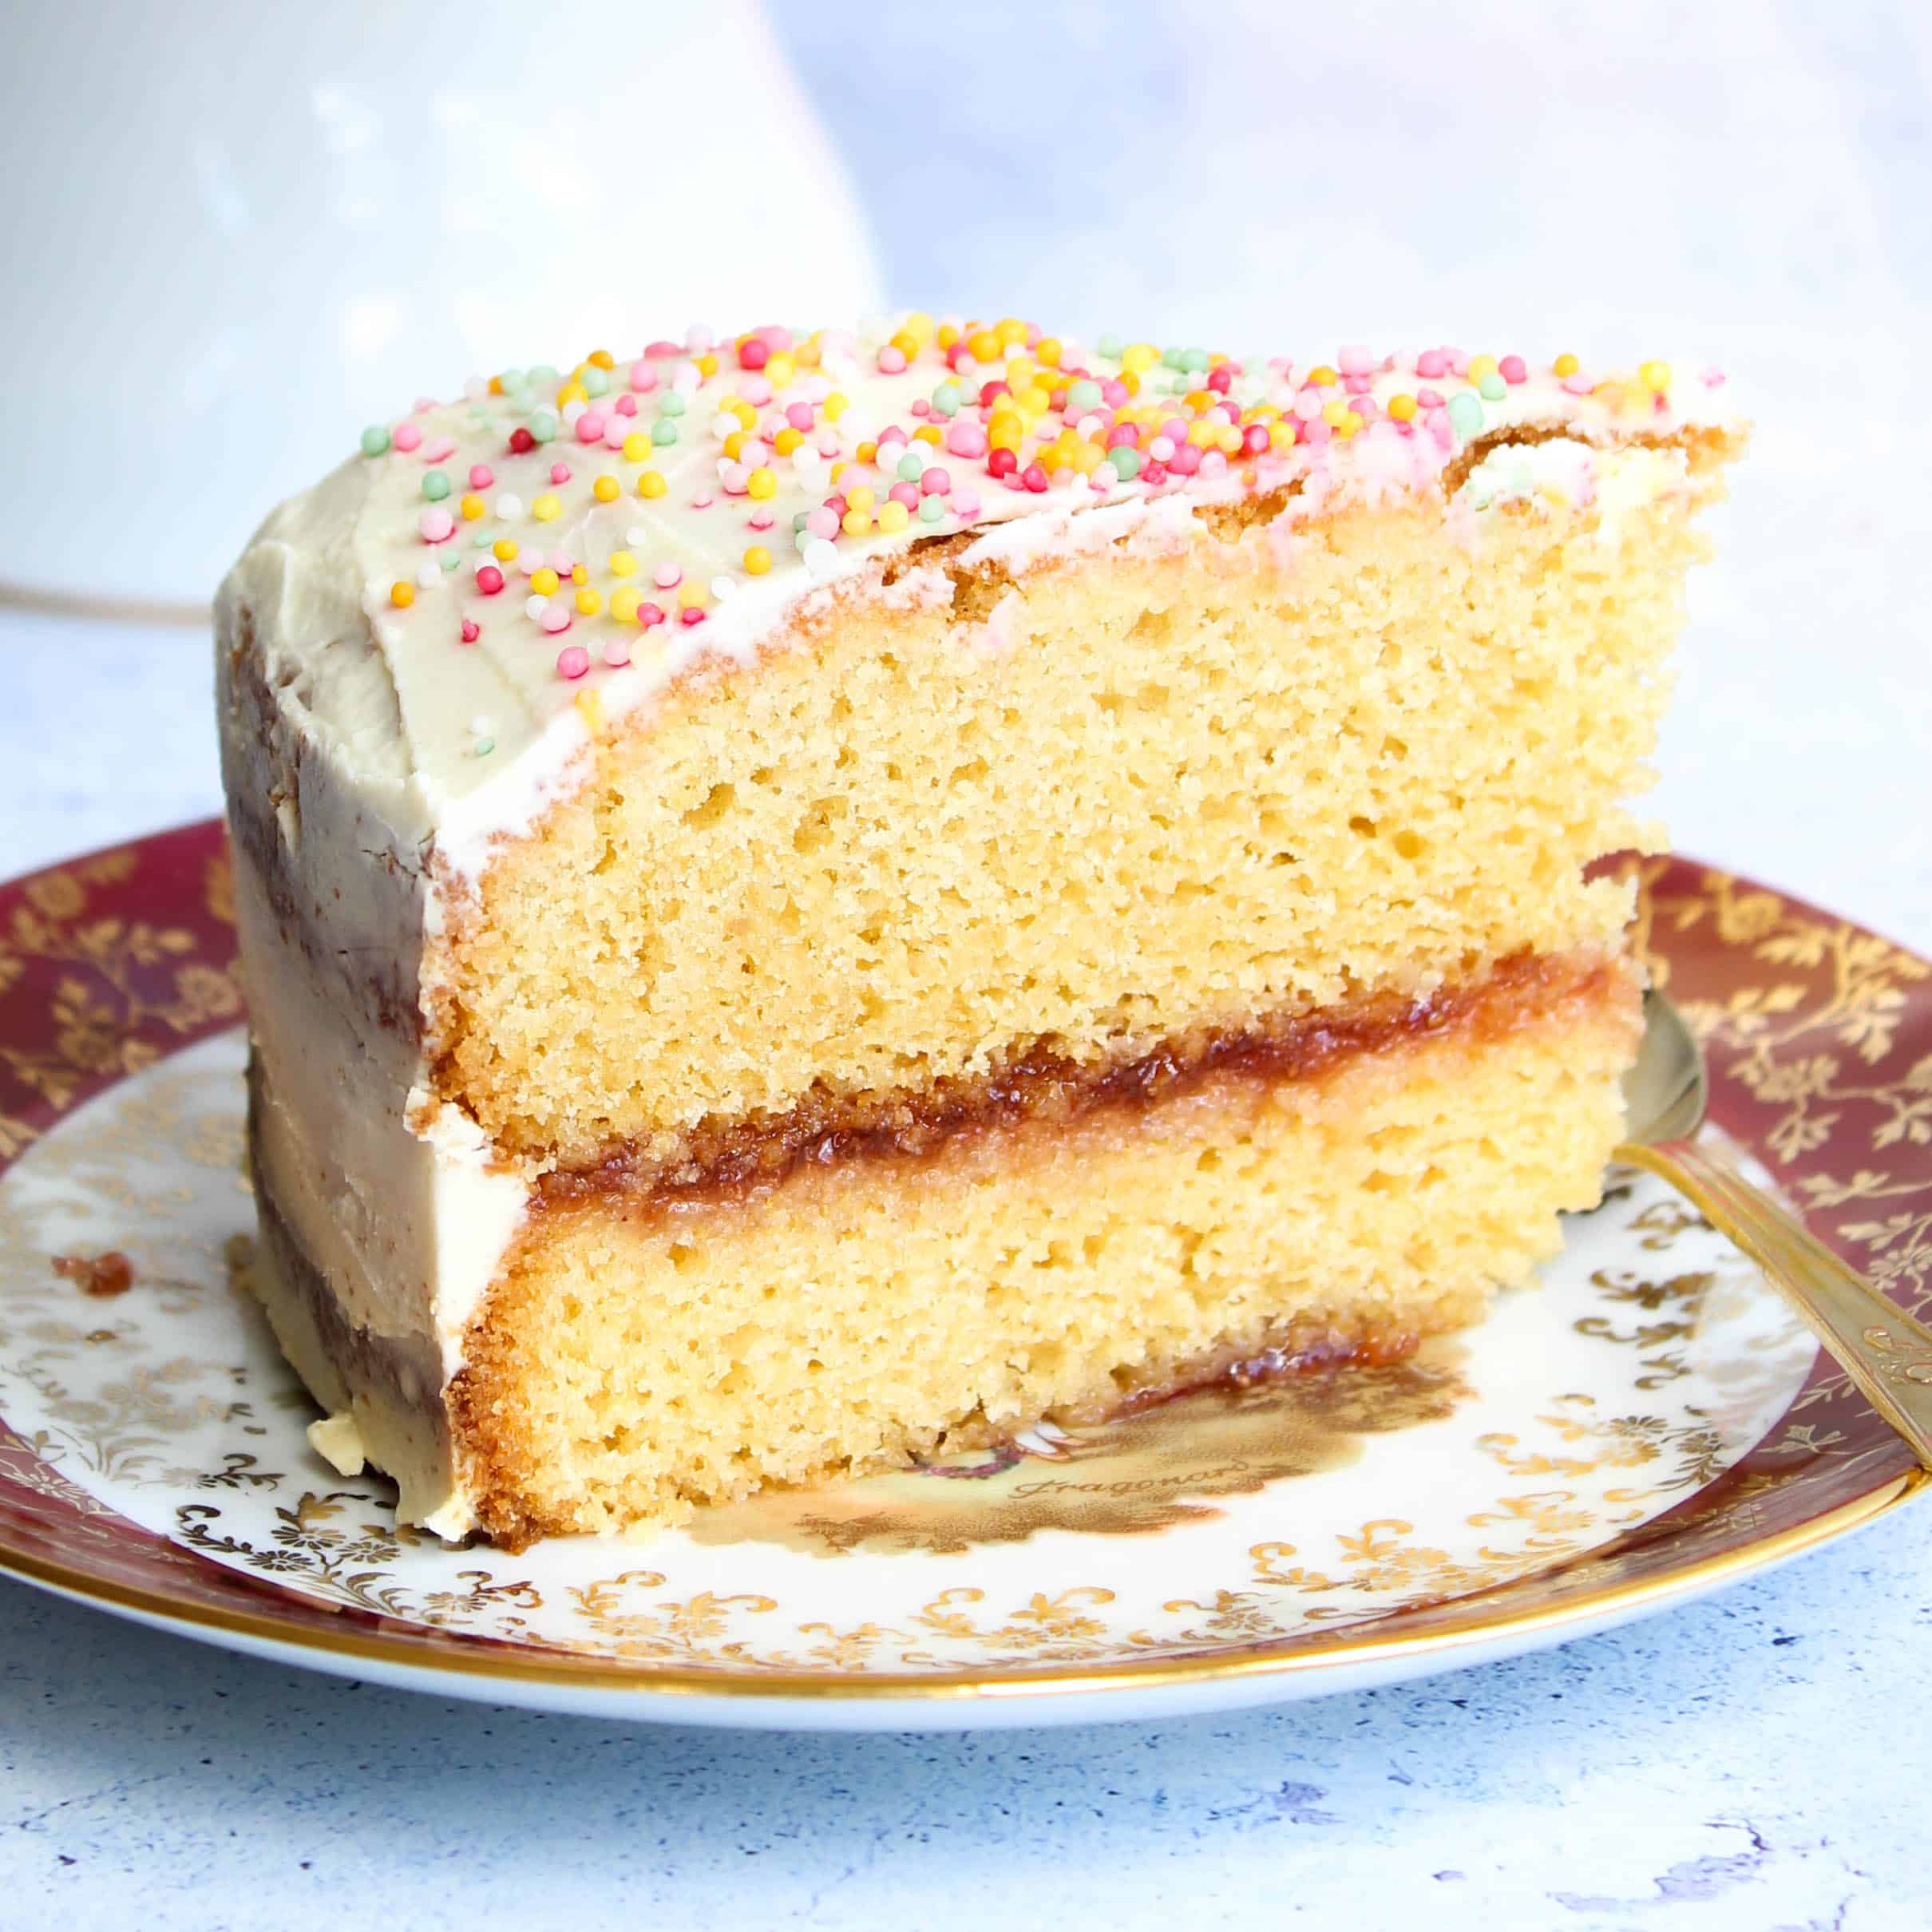 a slice of gluten-free sponge cake